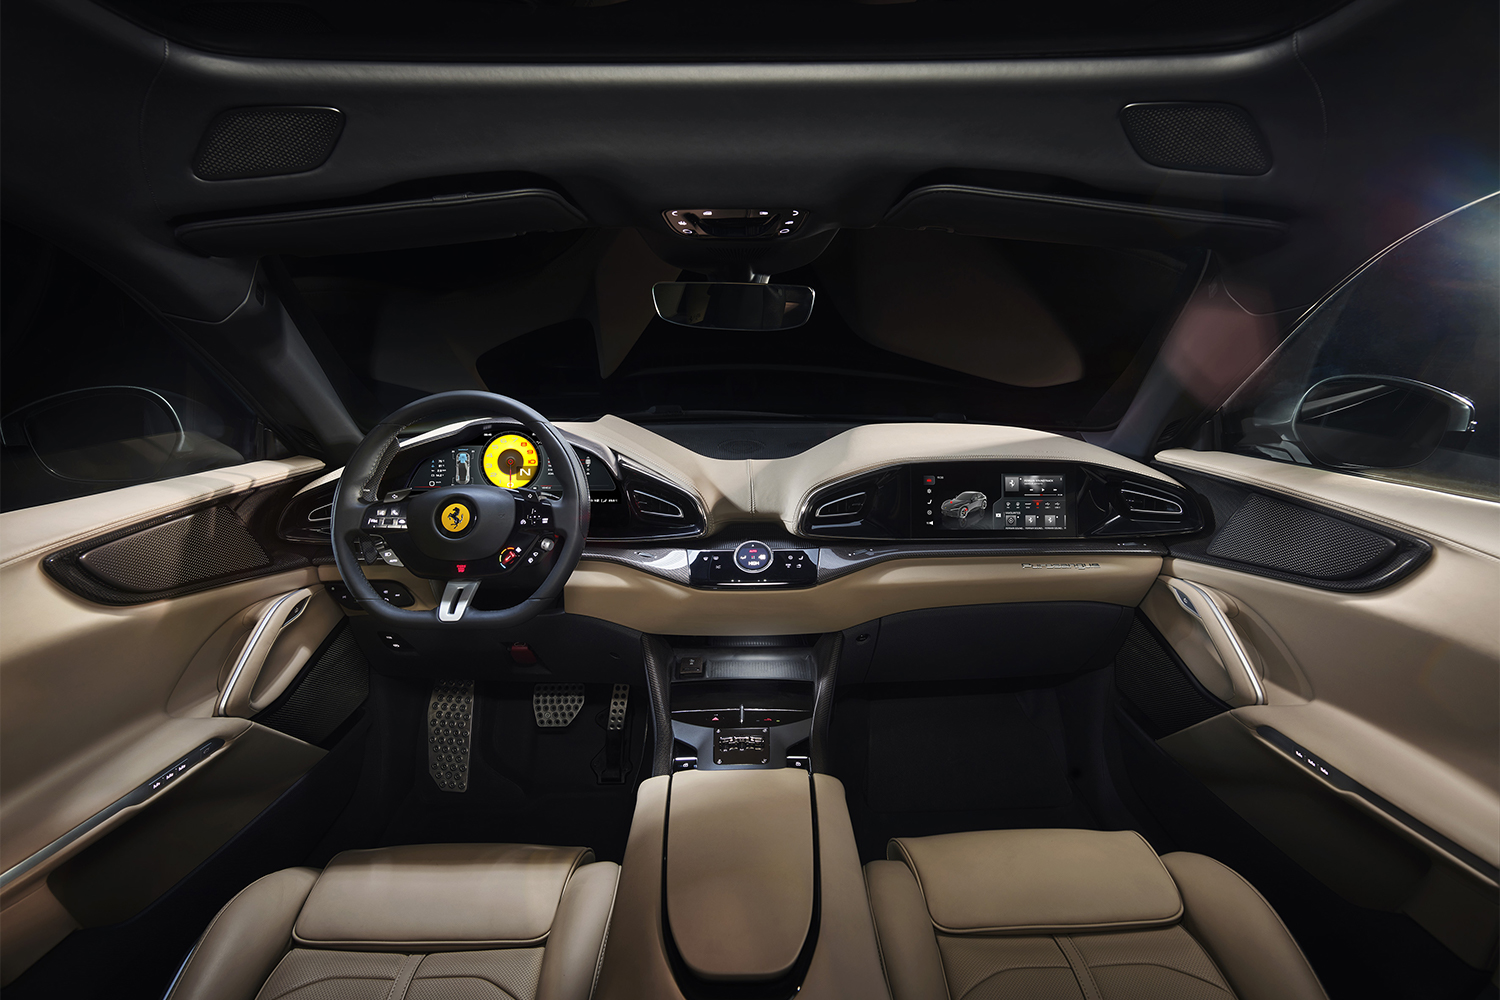 The interior of the new Ferrari Purosangue SUV